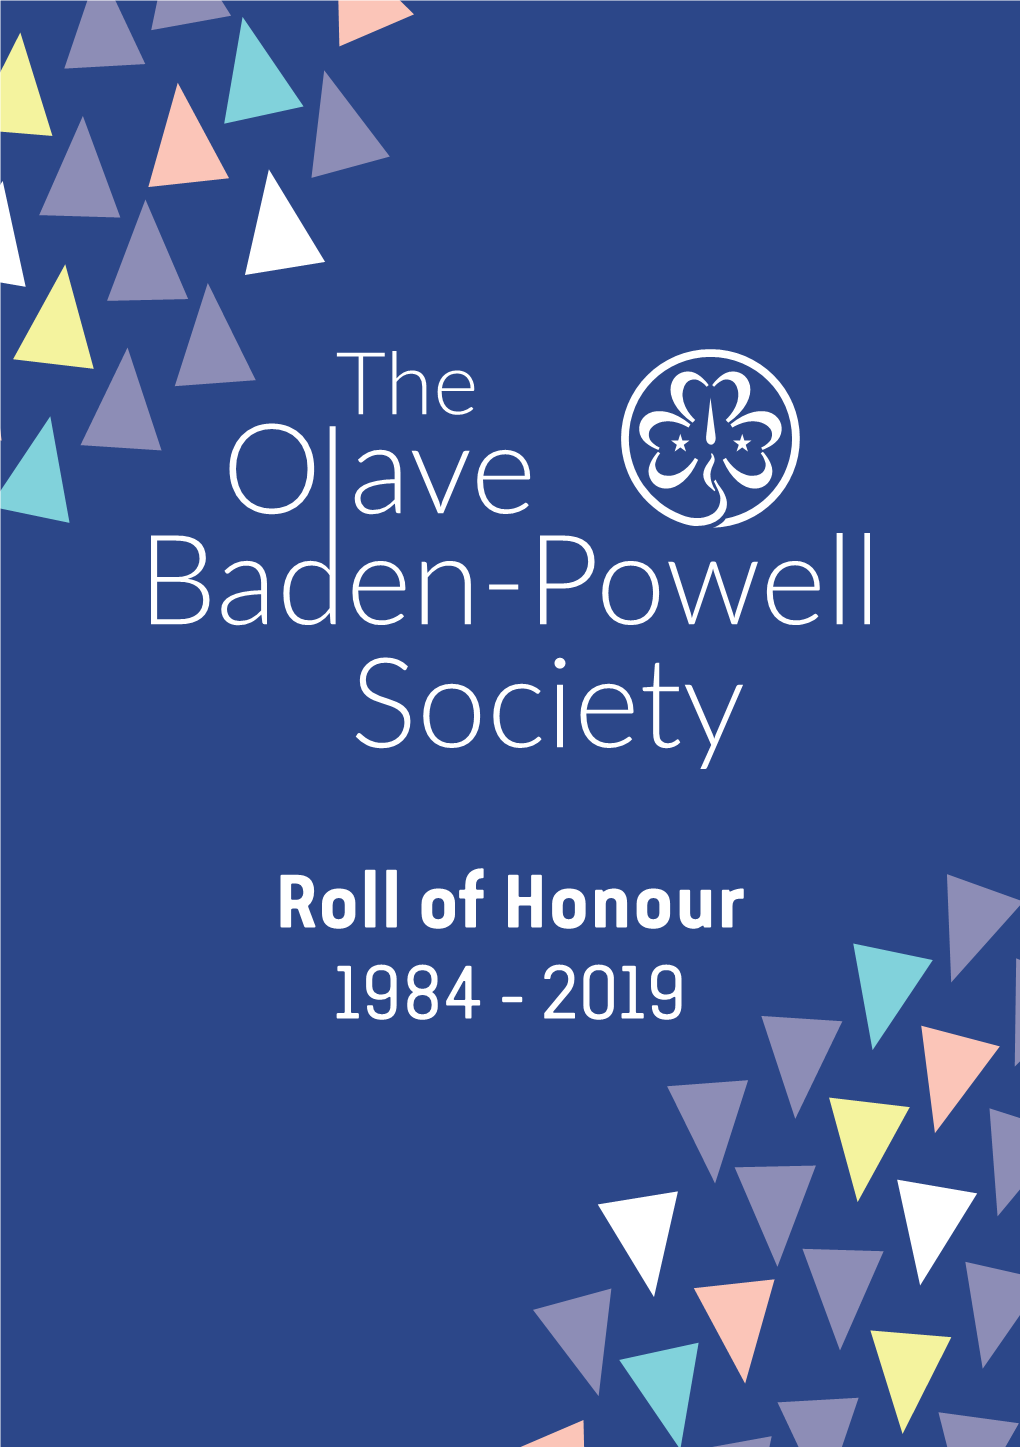 OB-PS Roll of Honour 2019